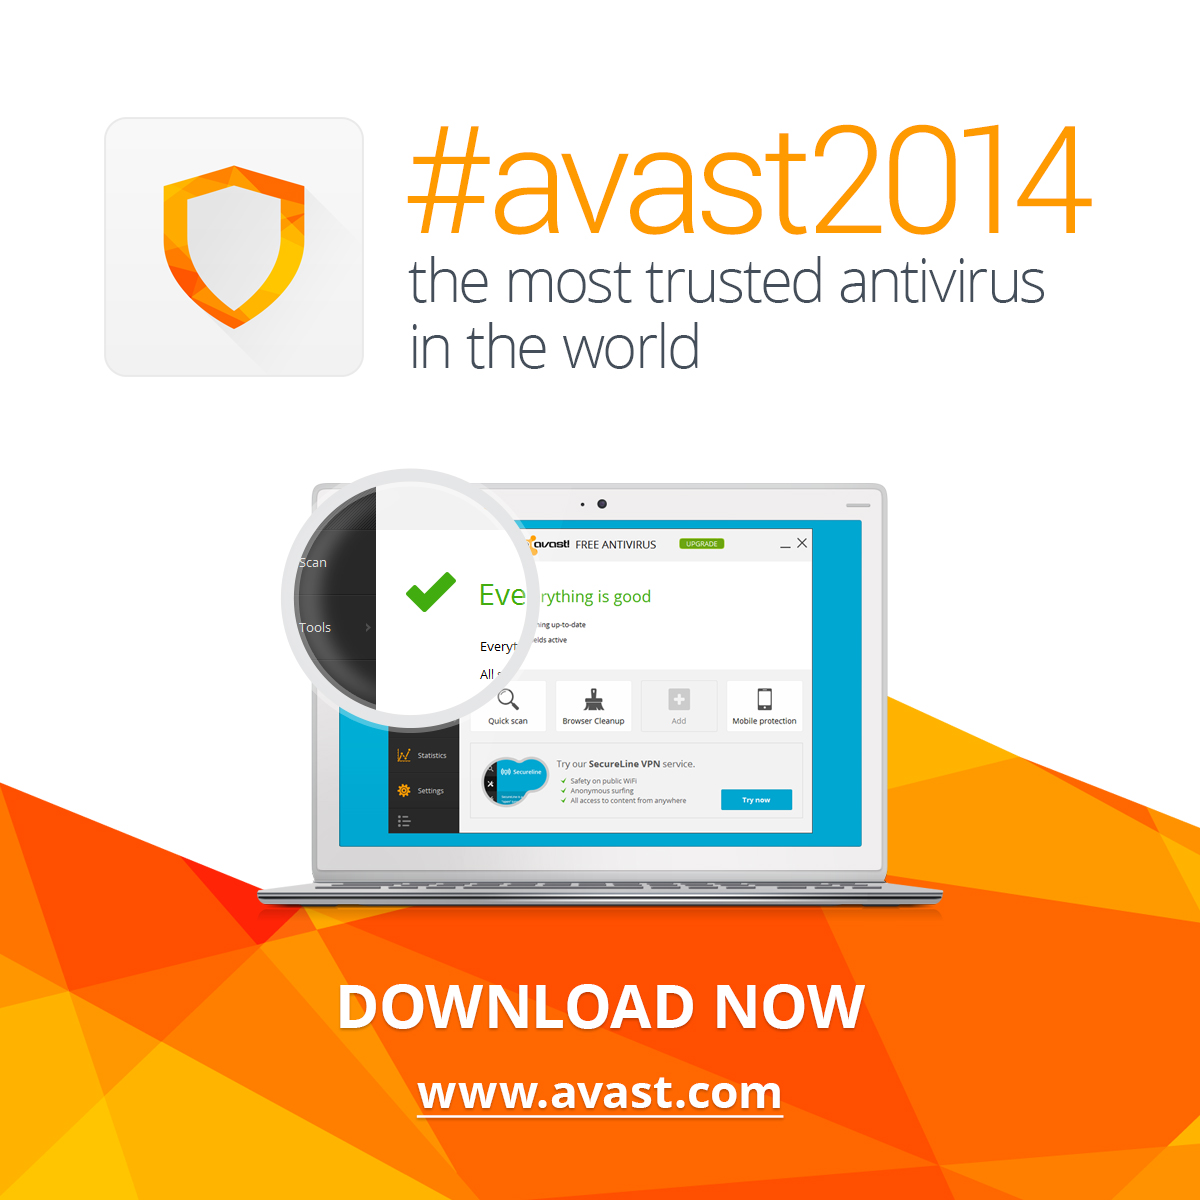 pobierz pełną wersję oprogramowania avast pro antivirus 2014